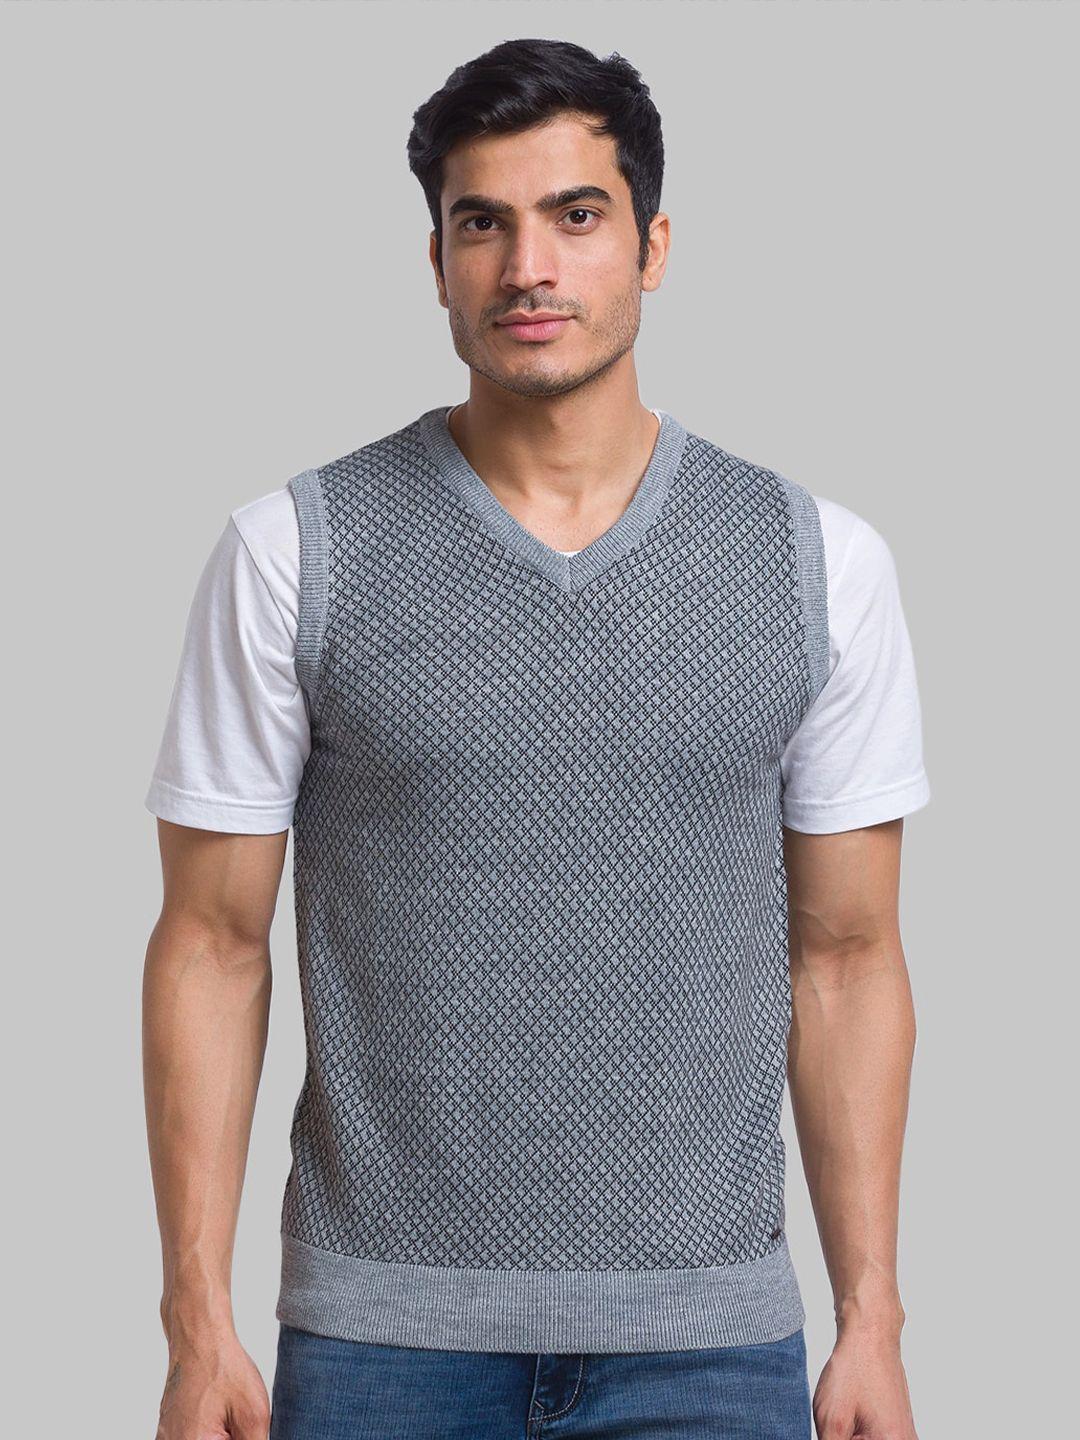 parx-men-printed-pullover-acrylic-sweater-vest